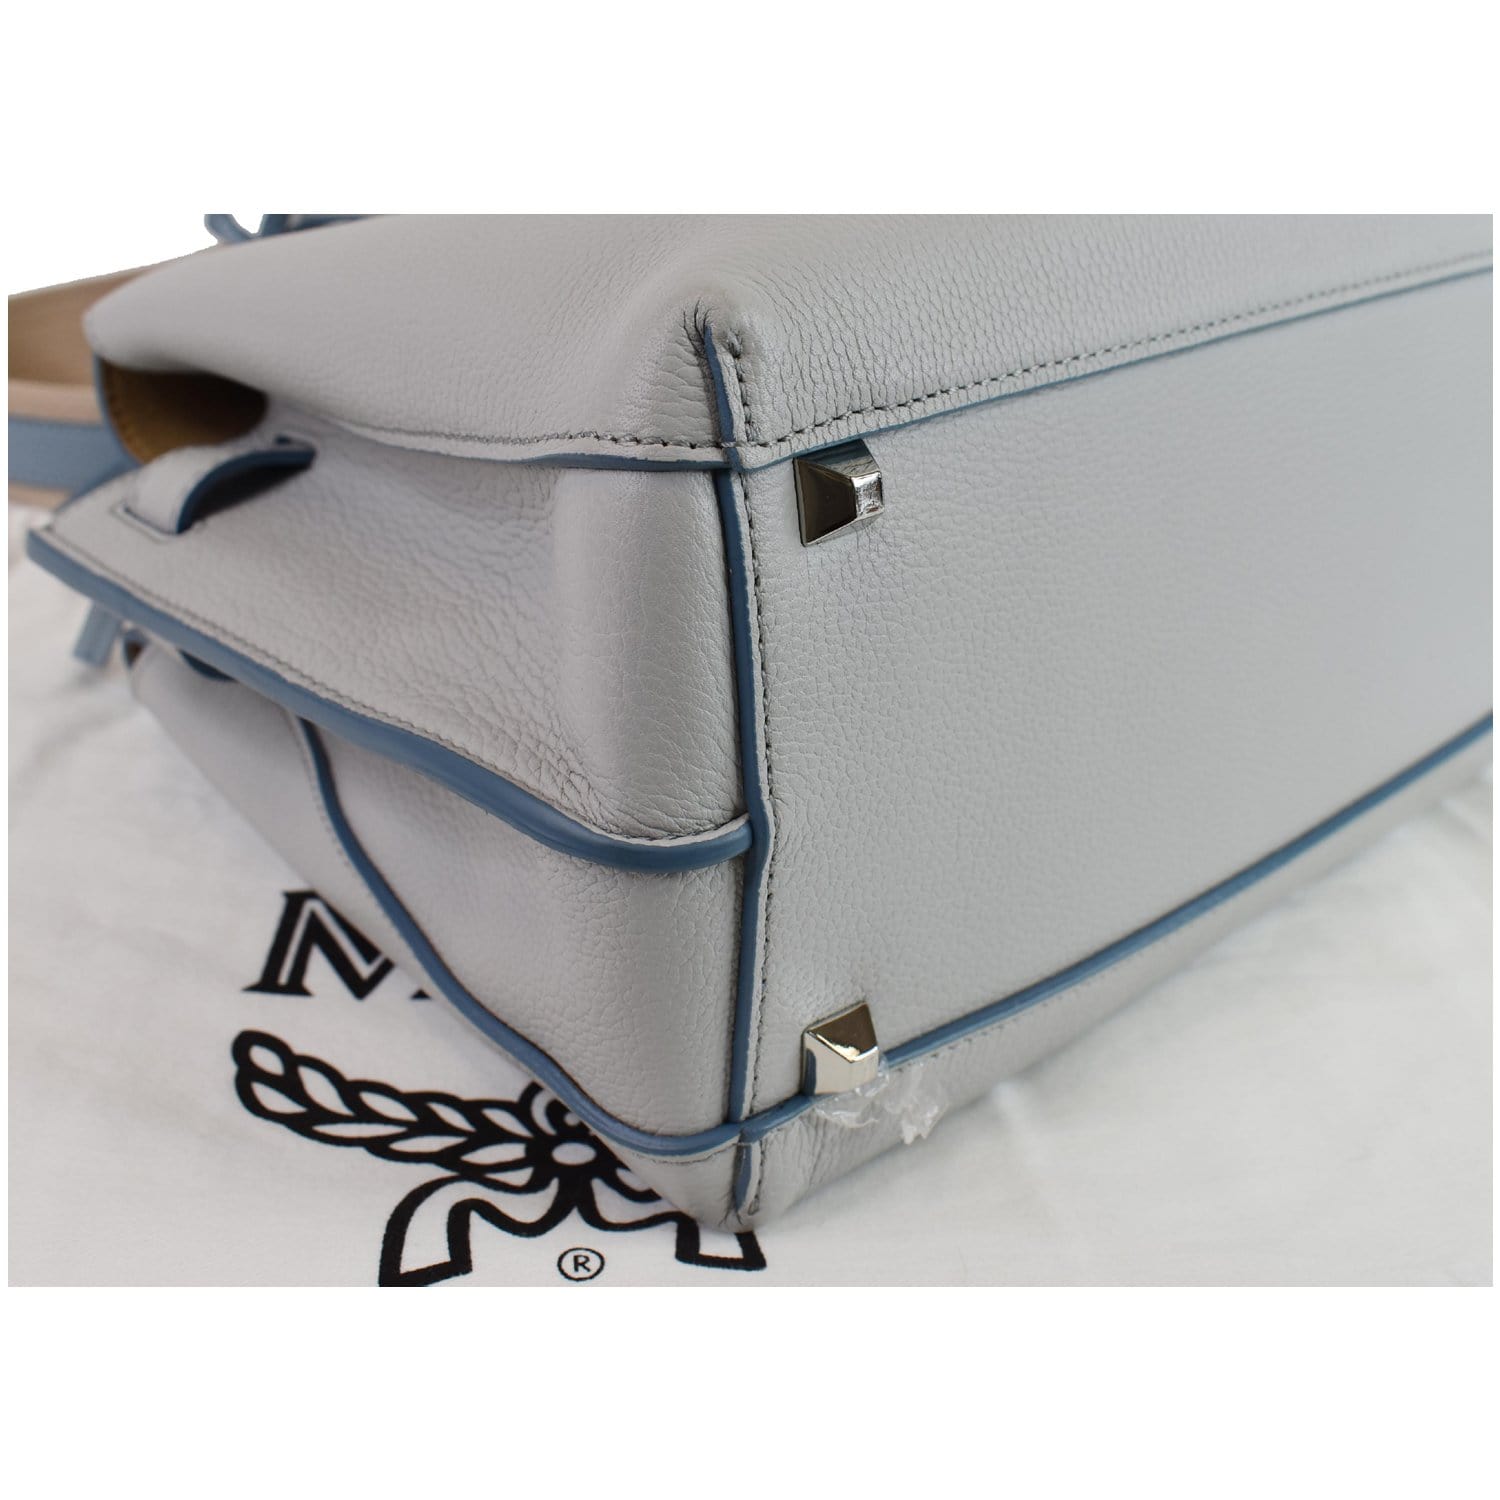 Milla Medium Leather Sky Blue Tote Bag - Seven Season